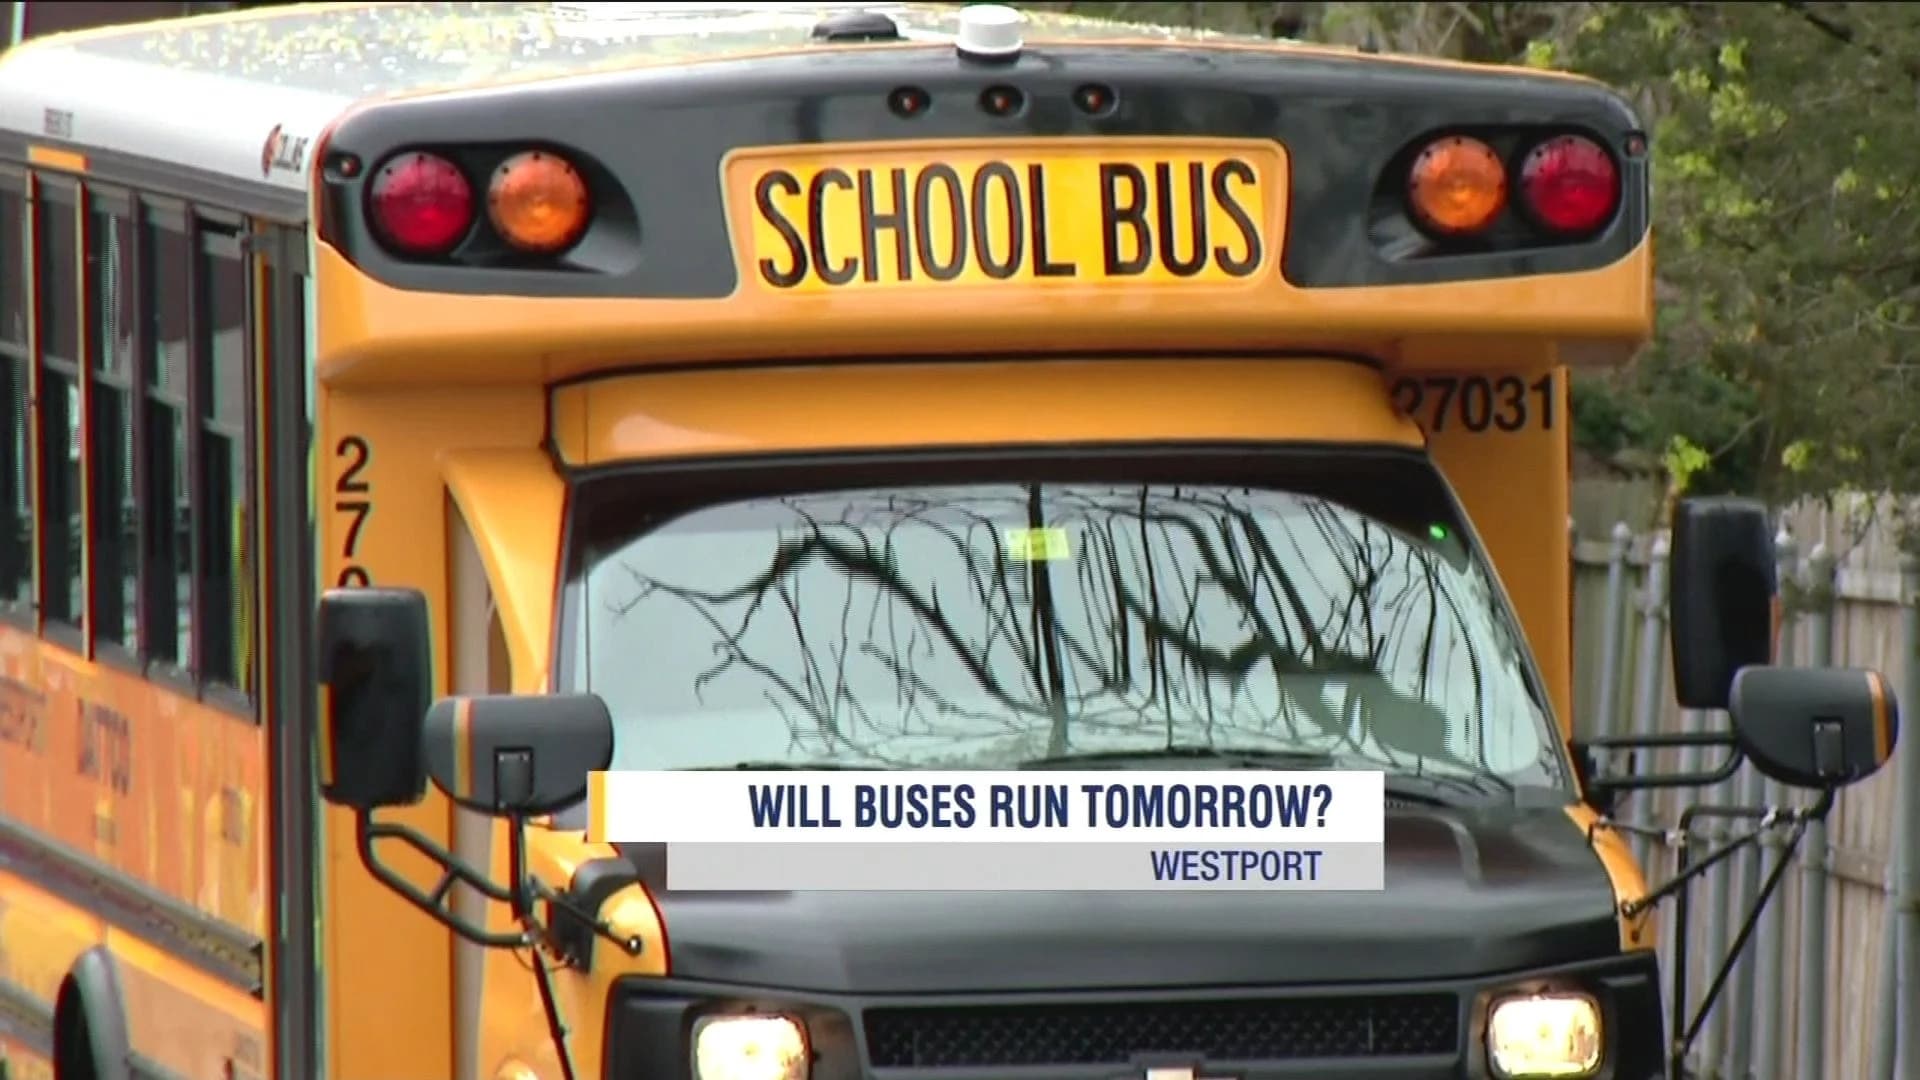 School bus service in limbo due to potential strike in Westport